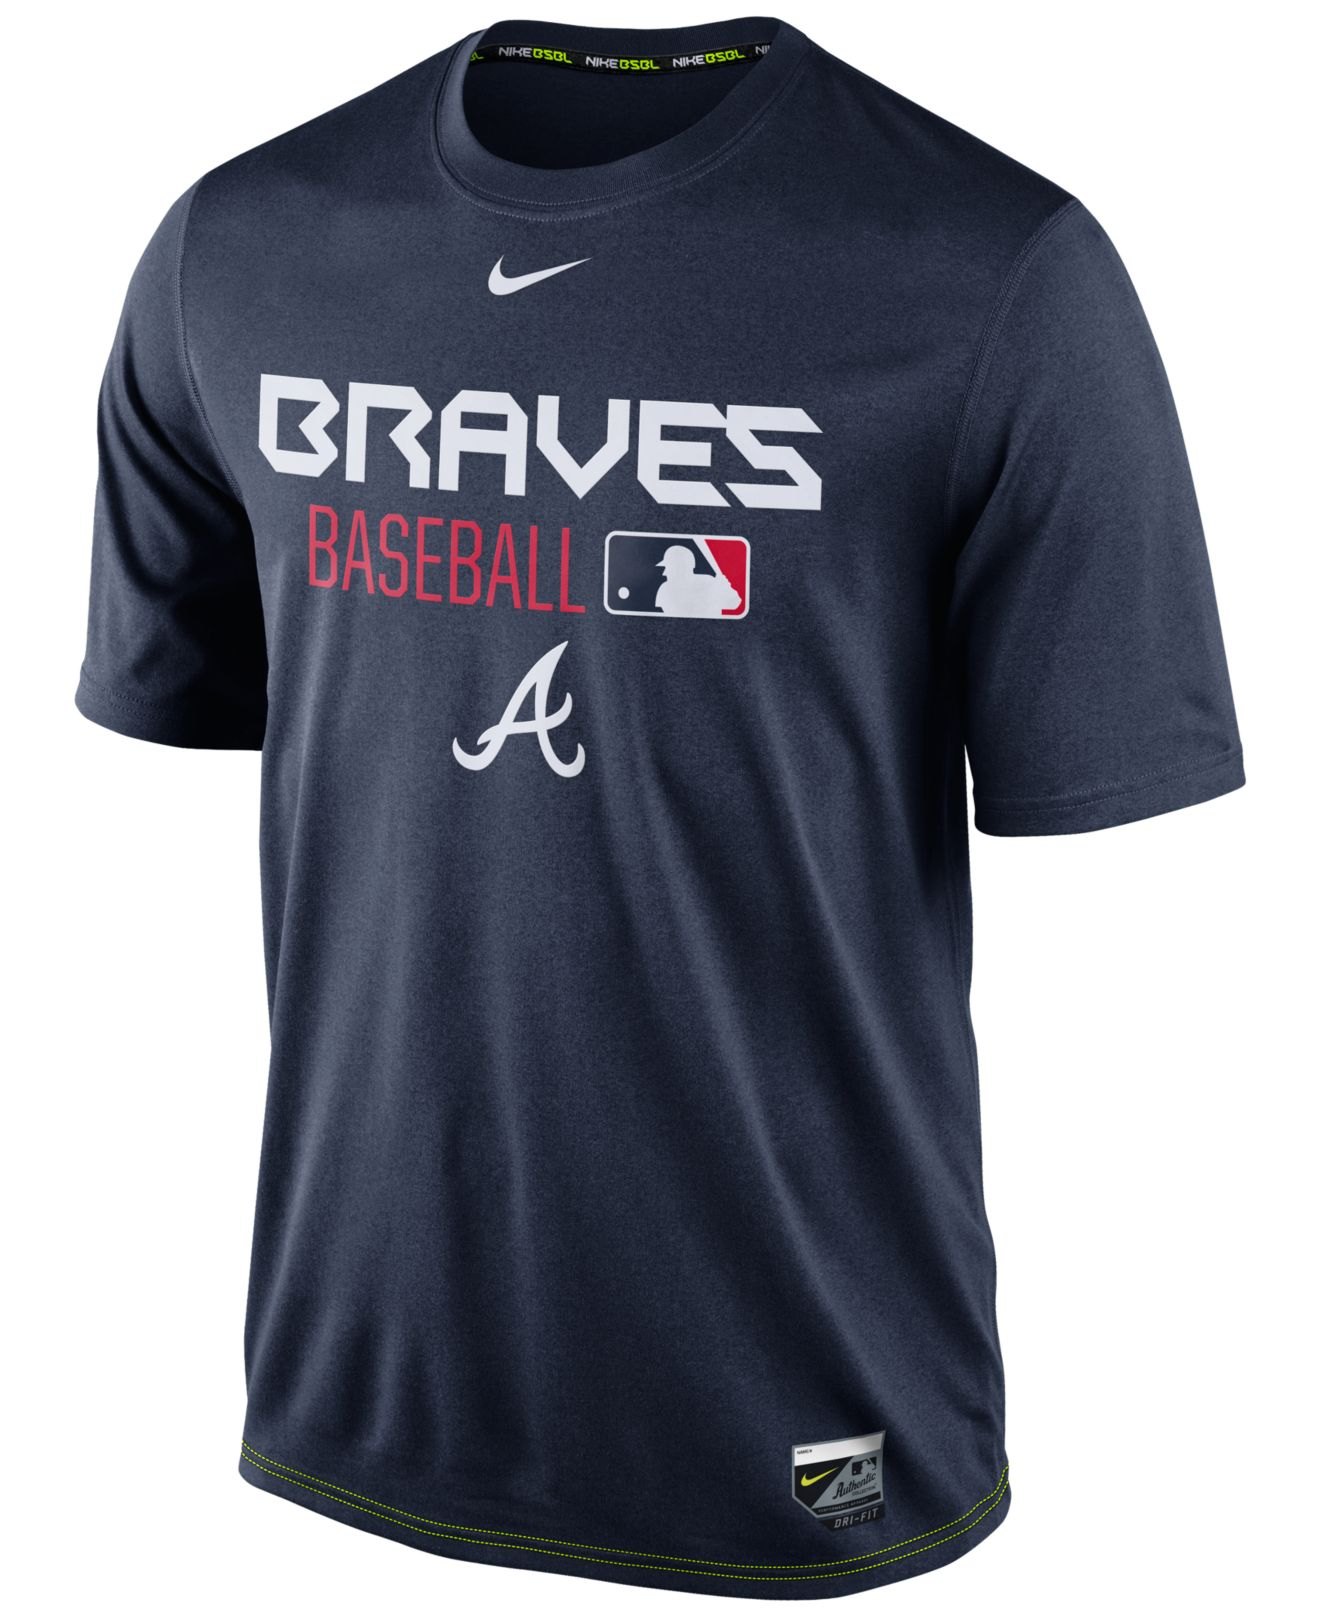 Lyst - Nike Men'S Atlanta Braves Legend Dri-Fit T-Shirt in Blue for Men